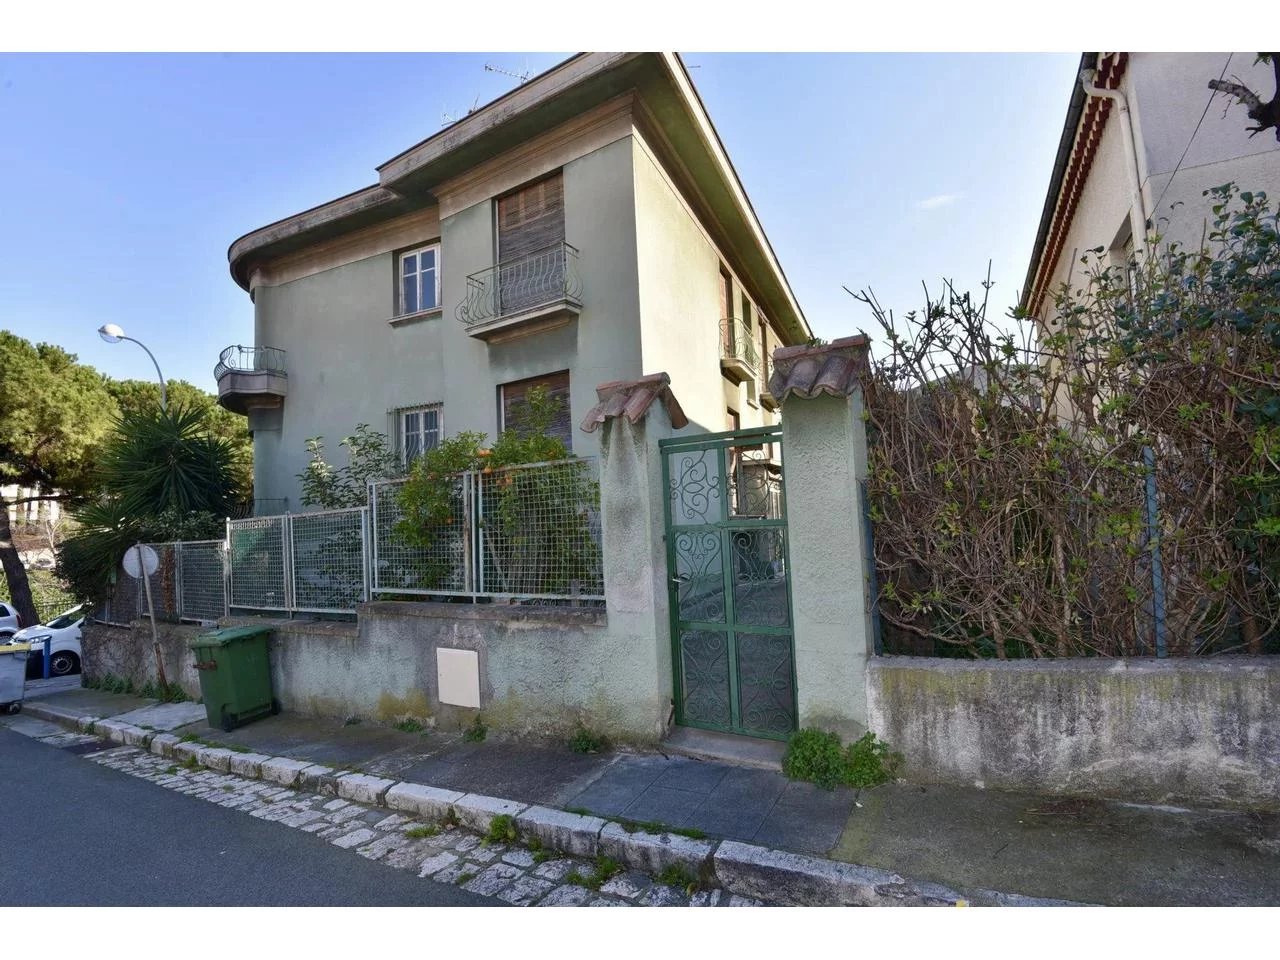 Appartement  2 Locali 36.65m2  In vendita   200 000 €